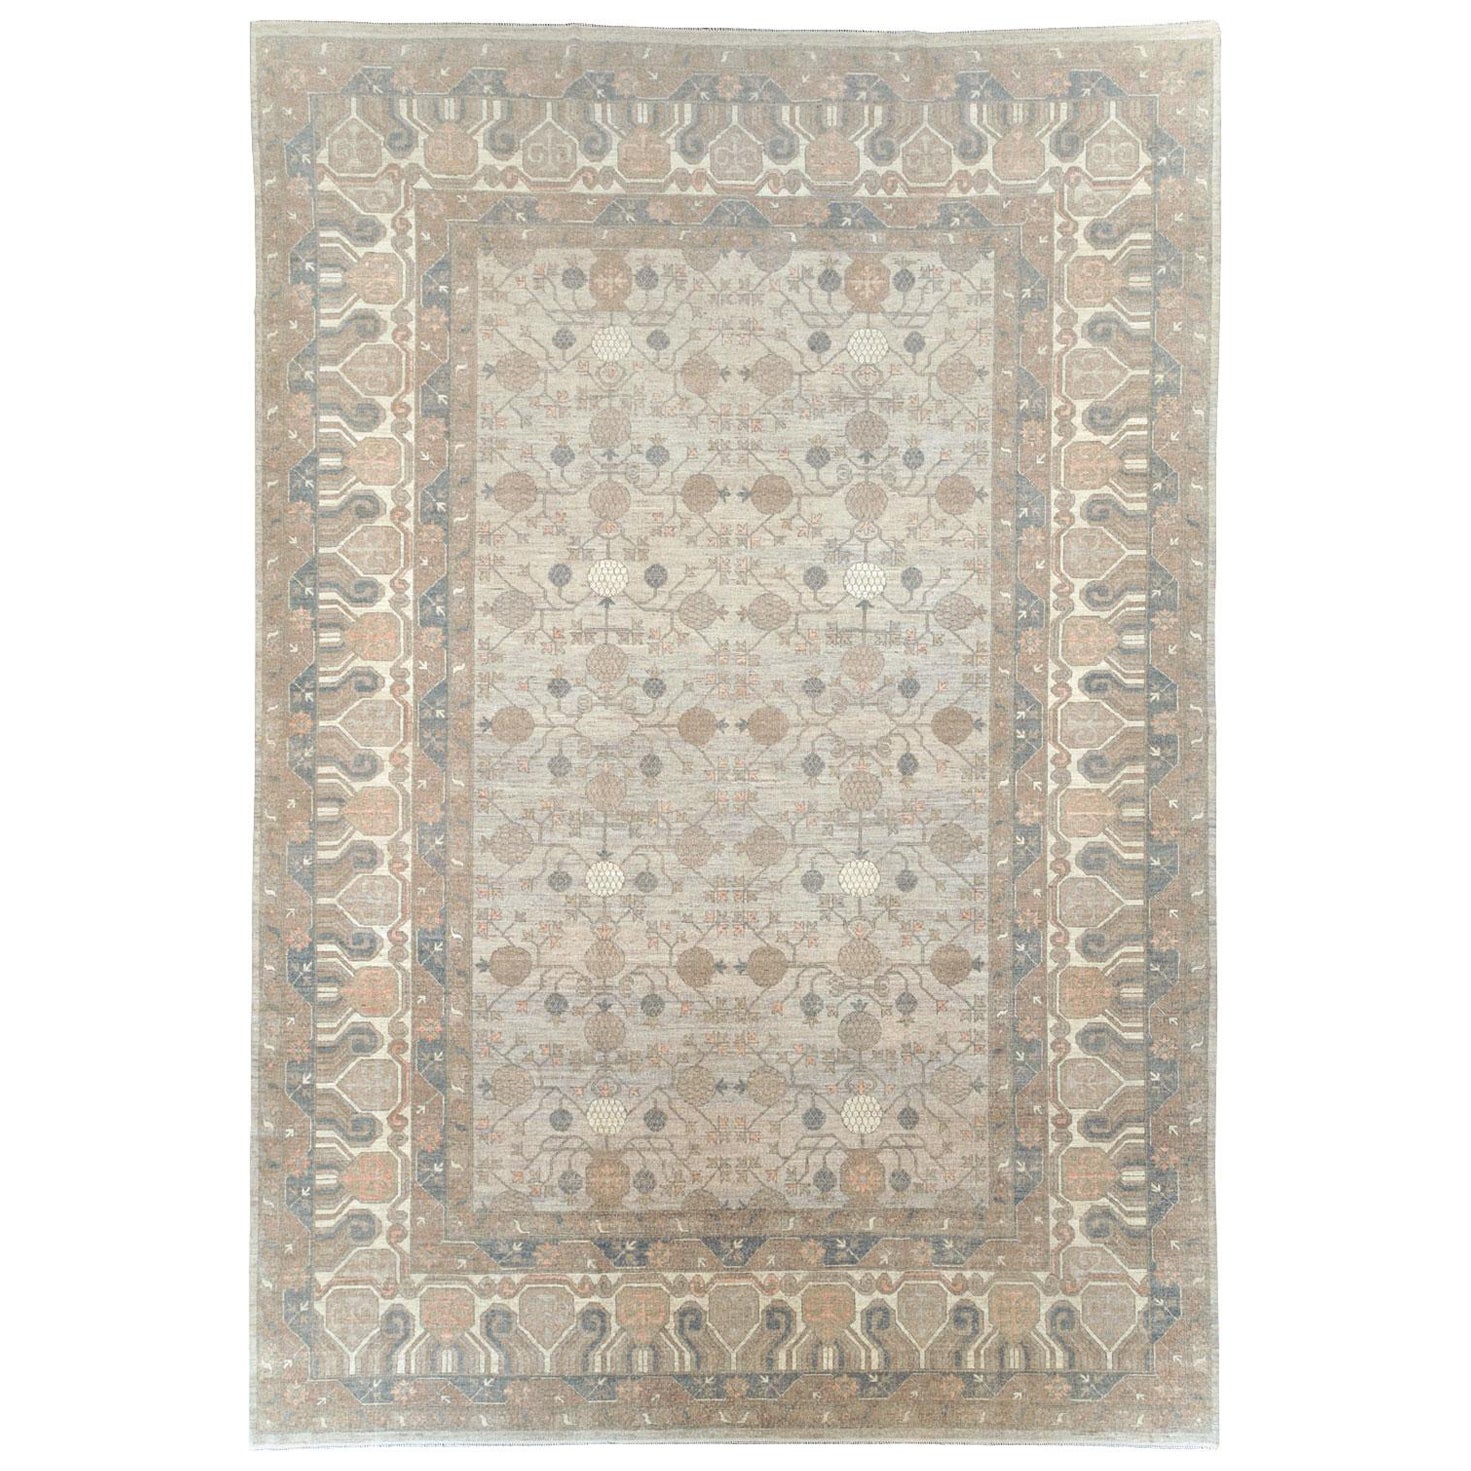 Contemporary Handmade East Turkestan Khotan Large Room Size Carpet